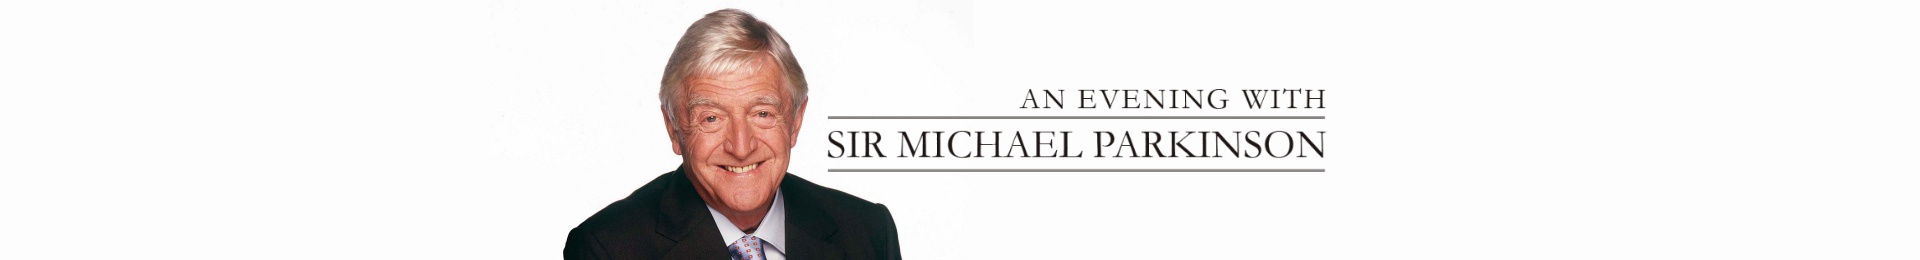 Sir Michael Parkinson on George Best banner image